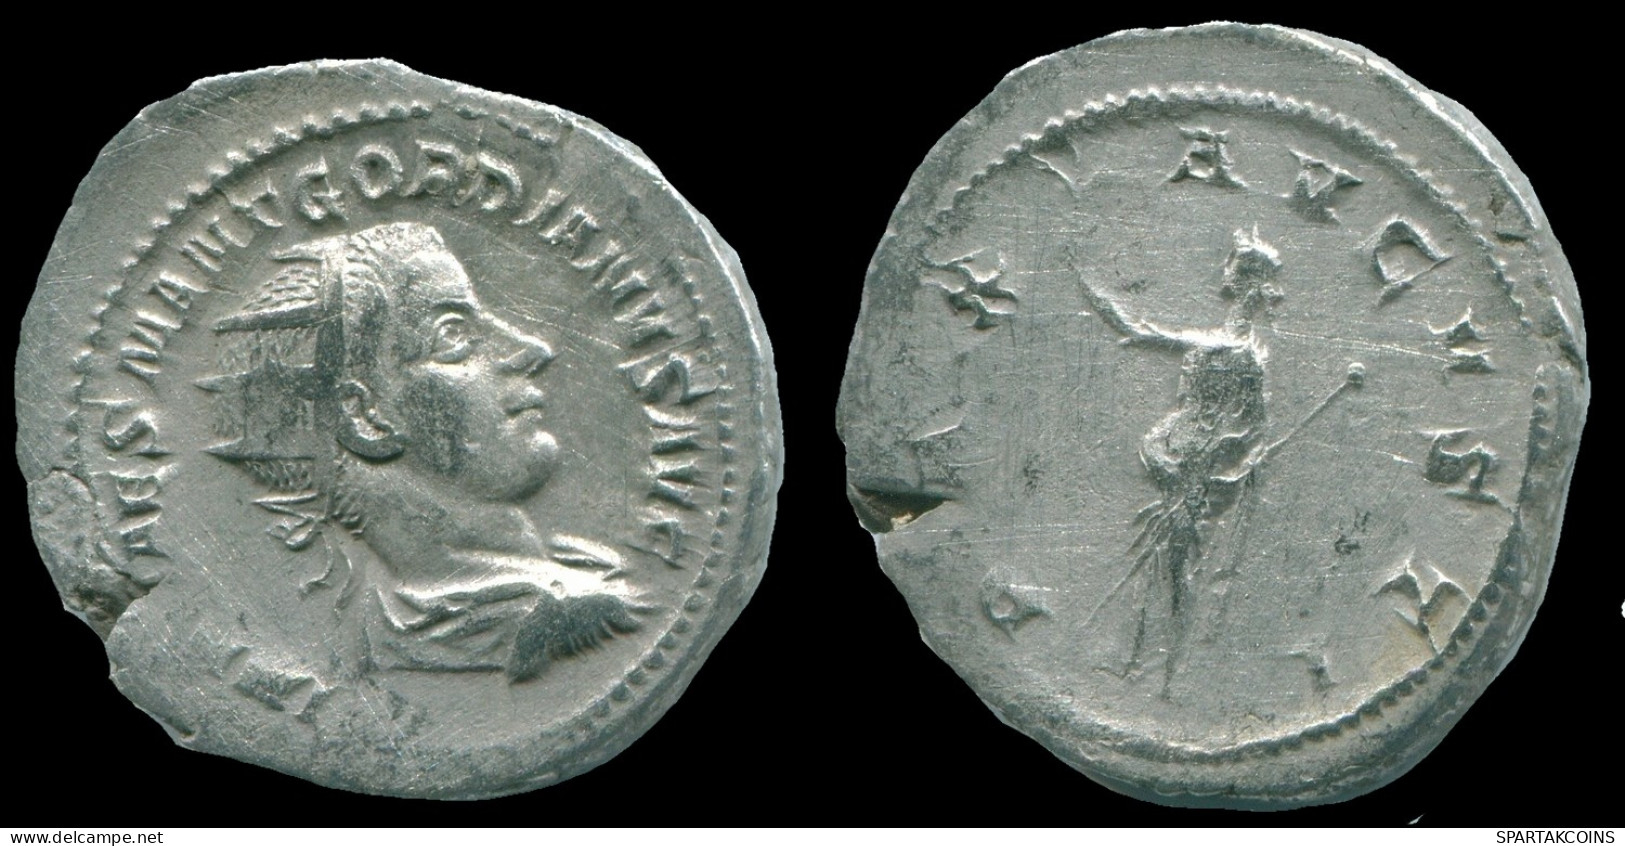 GORDIAN III AR ANTONINIANUS ROME AD 238 3RD OFFICINA PAX AVGVSTI #ANC13112.43.D.A - La Crisis Militar (235 / 284)